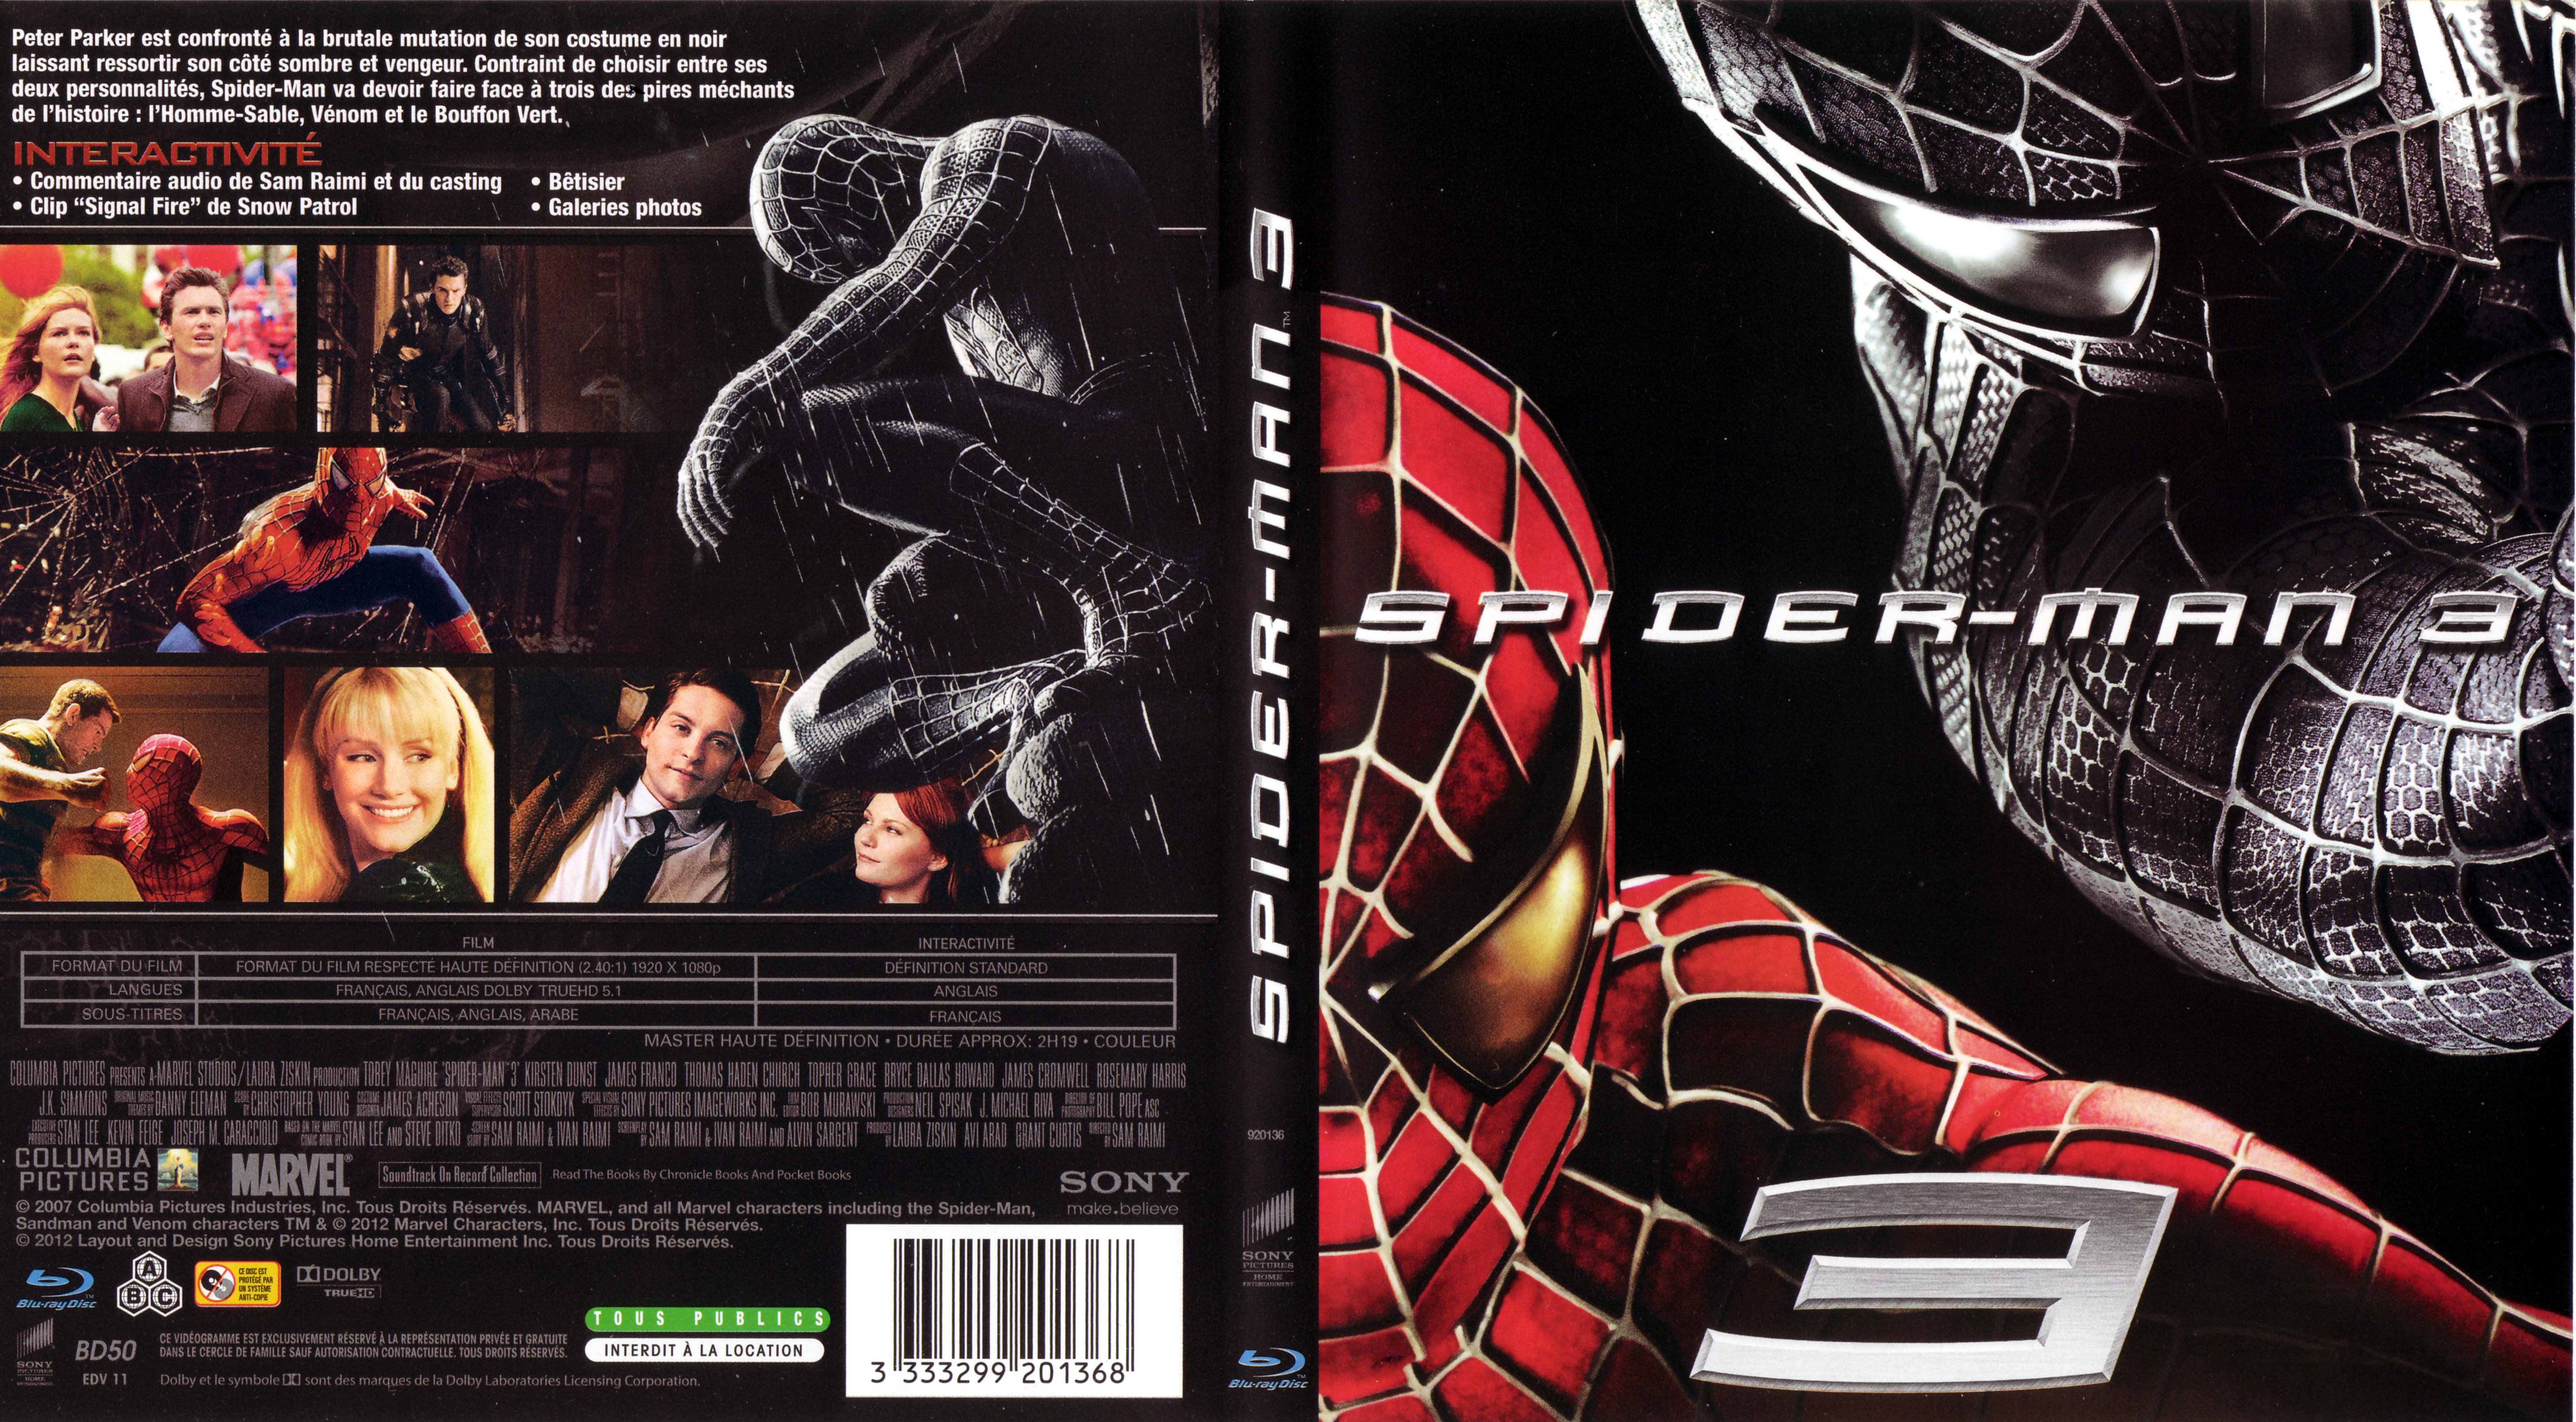 Jaquette DVD Spiderman 3 (BLU-RAY) v4